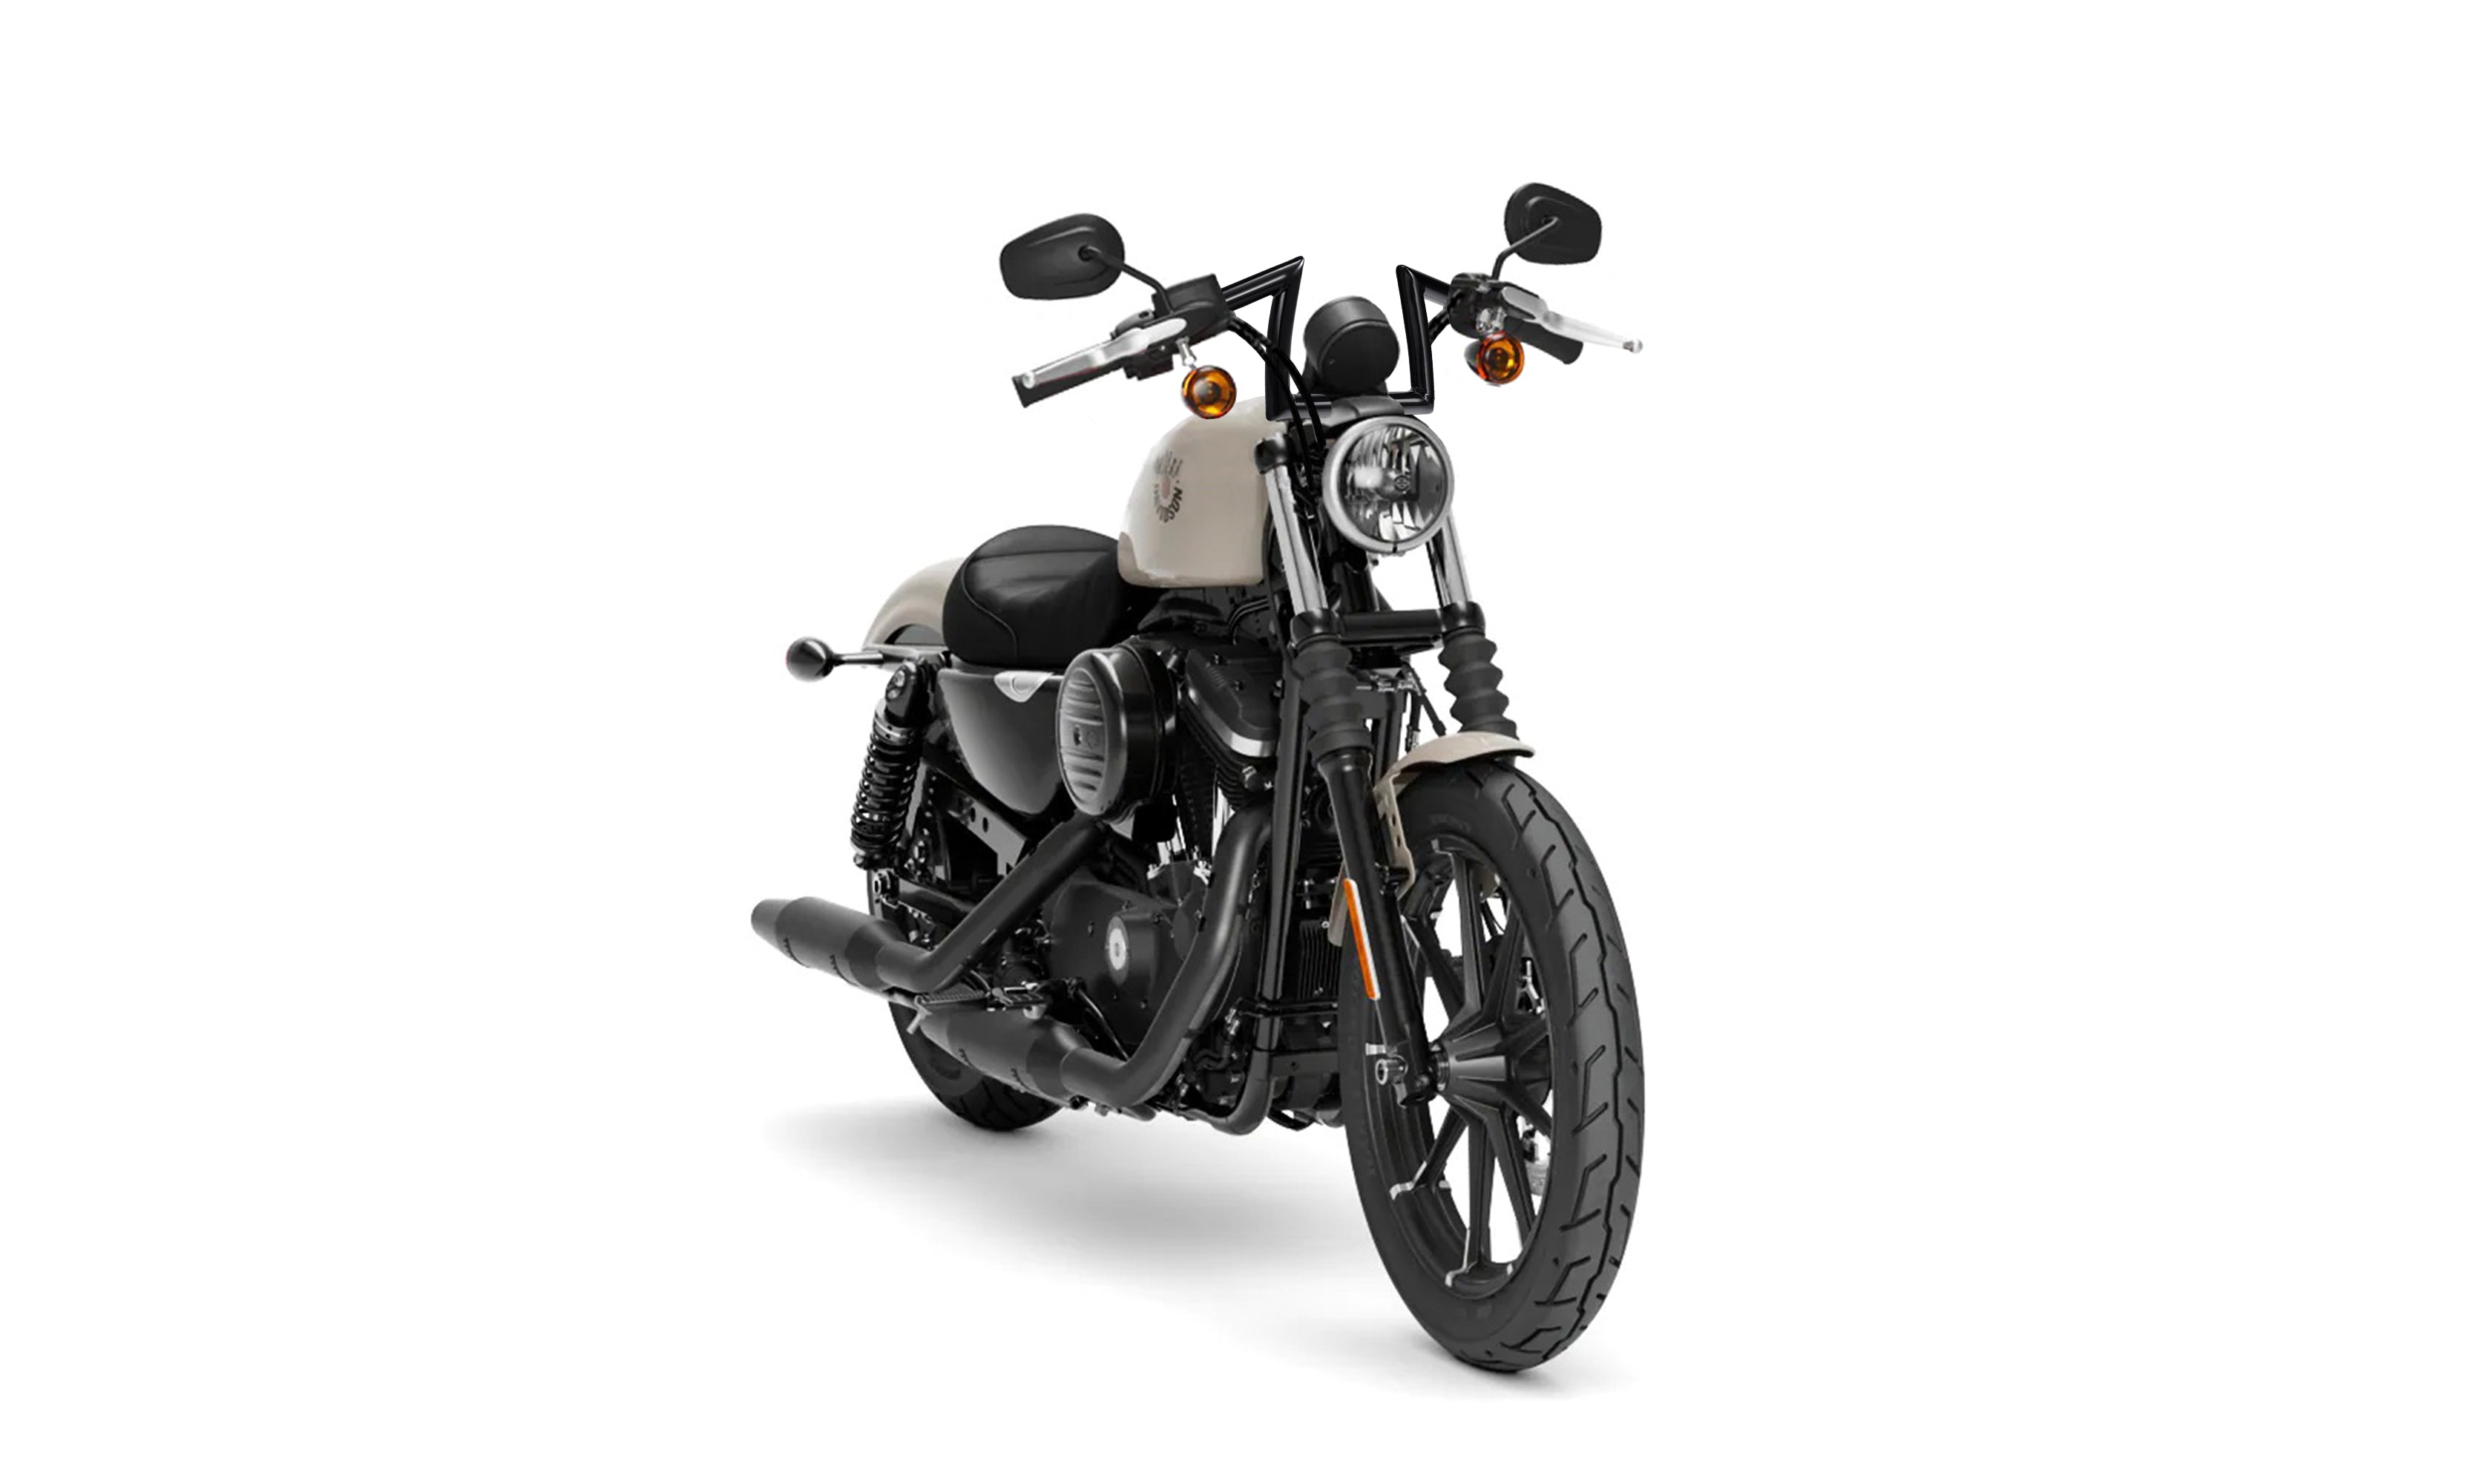 Viking Iron Born Z Handlebar For Harley Sportster 883 Iron XL883N Gloss Black Bag on Bike View @expand